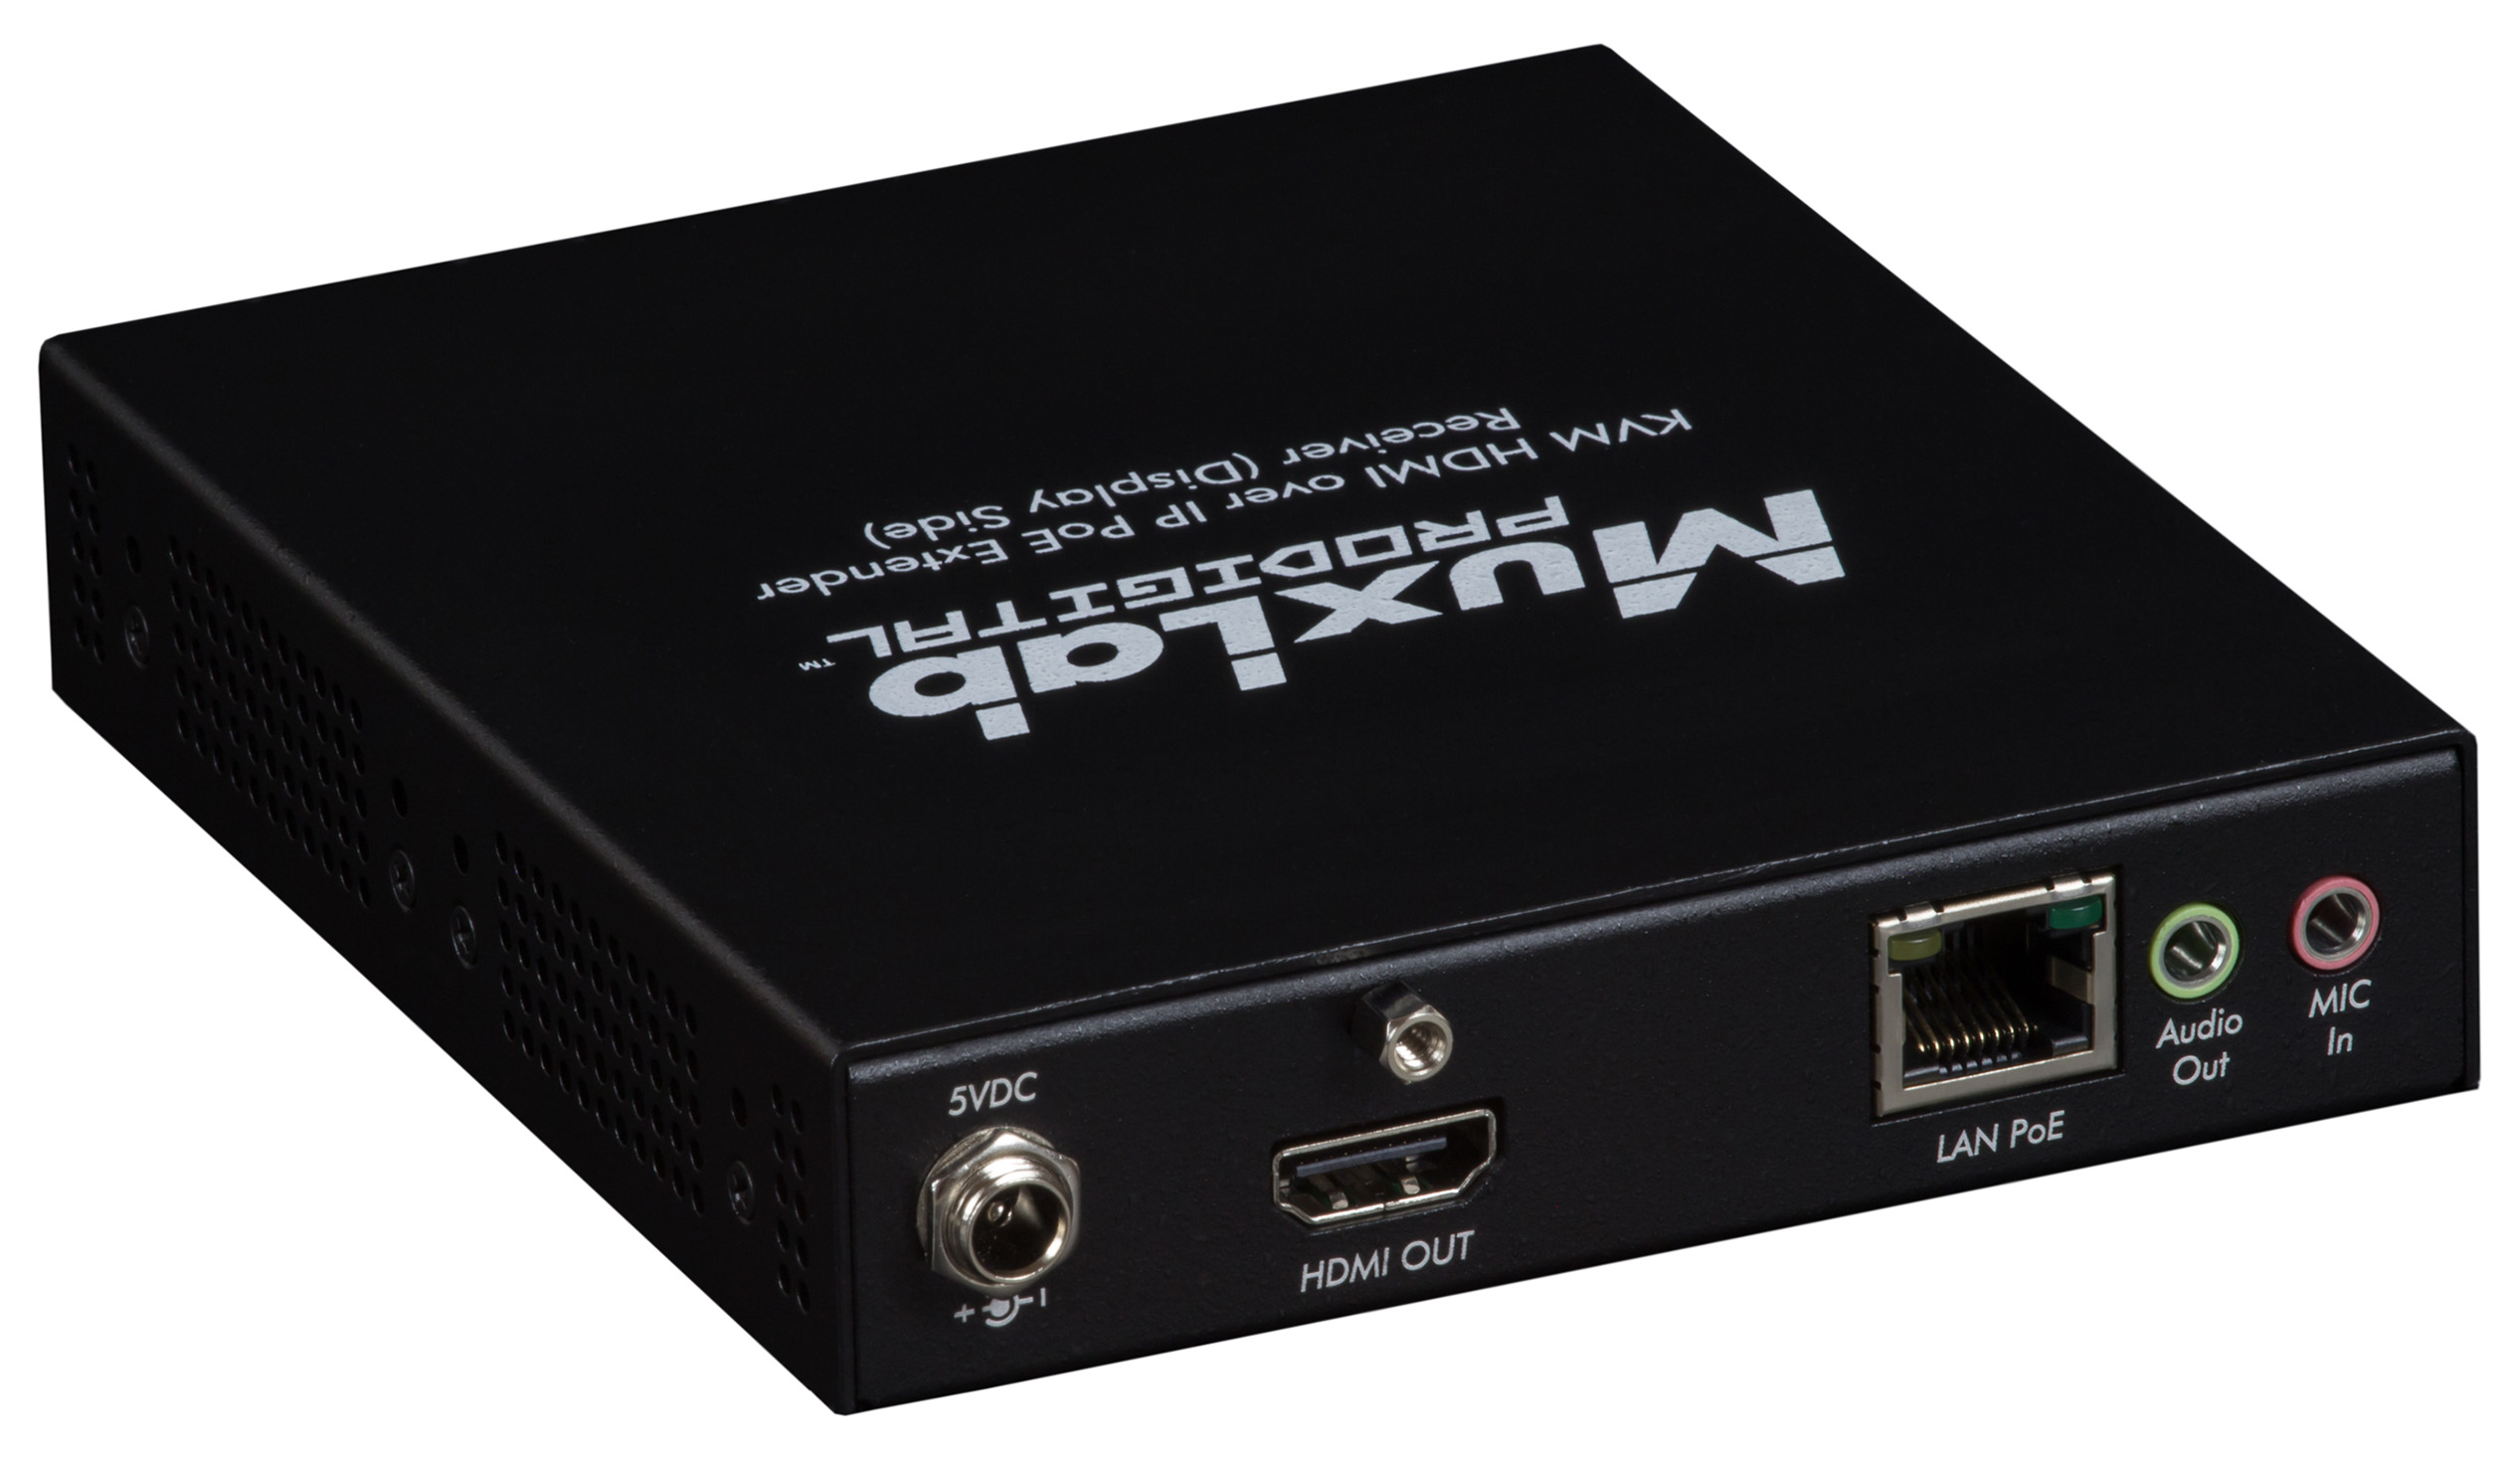 KVM HDMI over IP PoE Receiver, UHD-4K - Muxlab